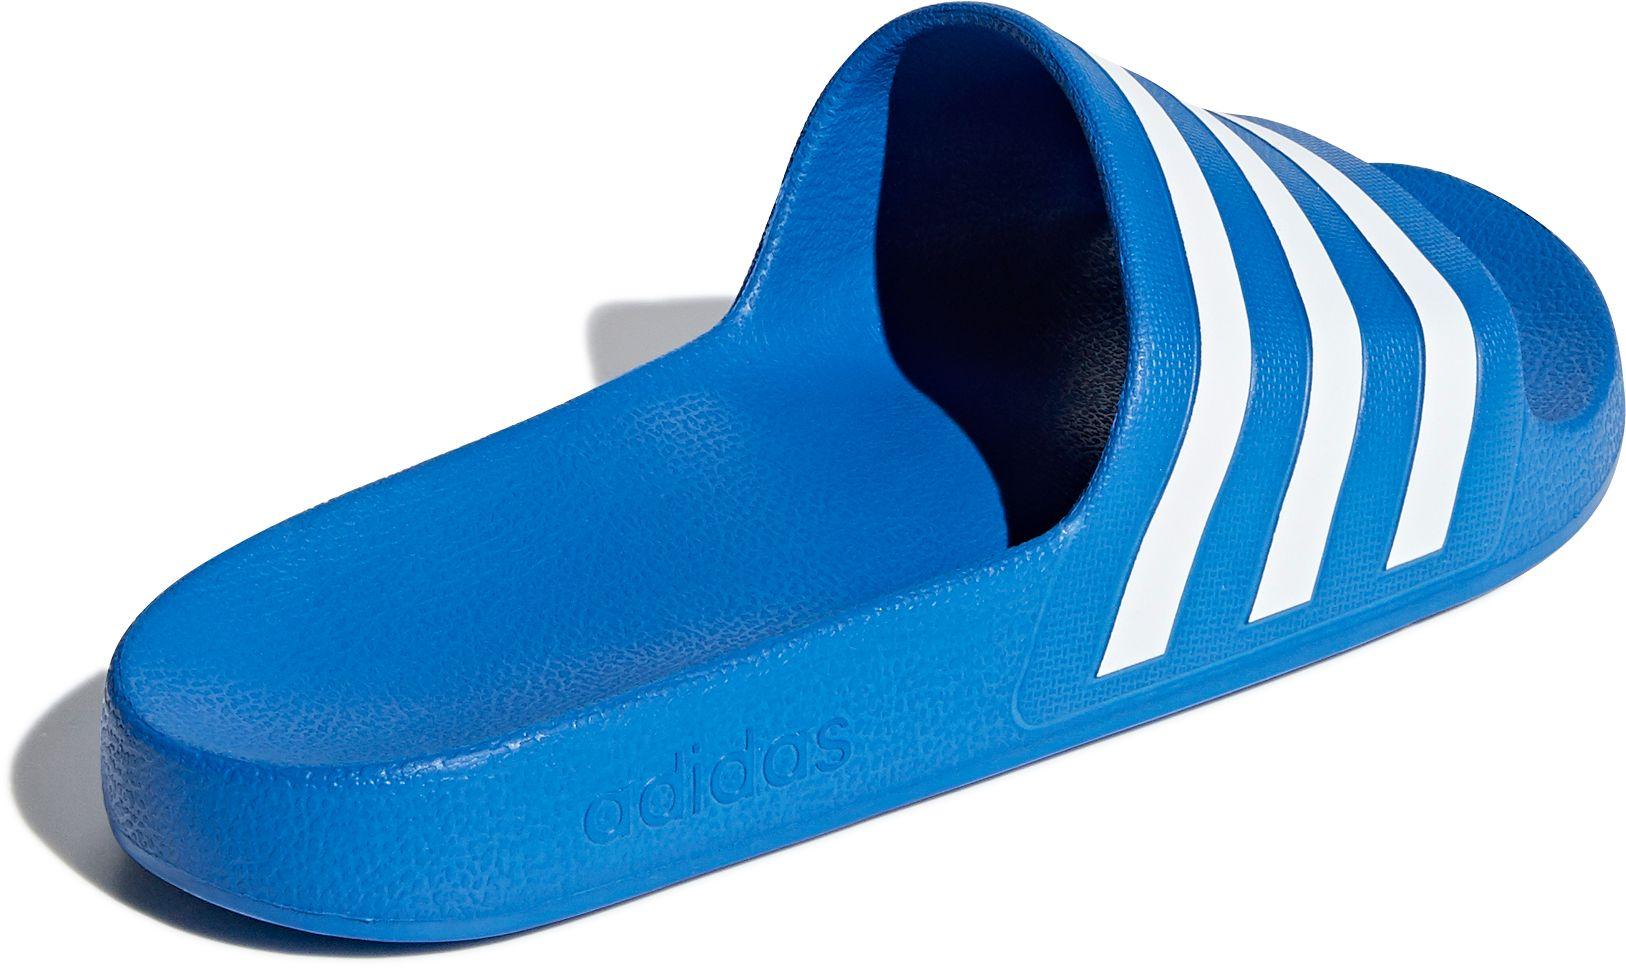 Synthetic Adilette Aqua Slides in Bright Blue/White/Bright Blue (Blue) for Men - 72% - Lyst